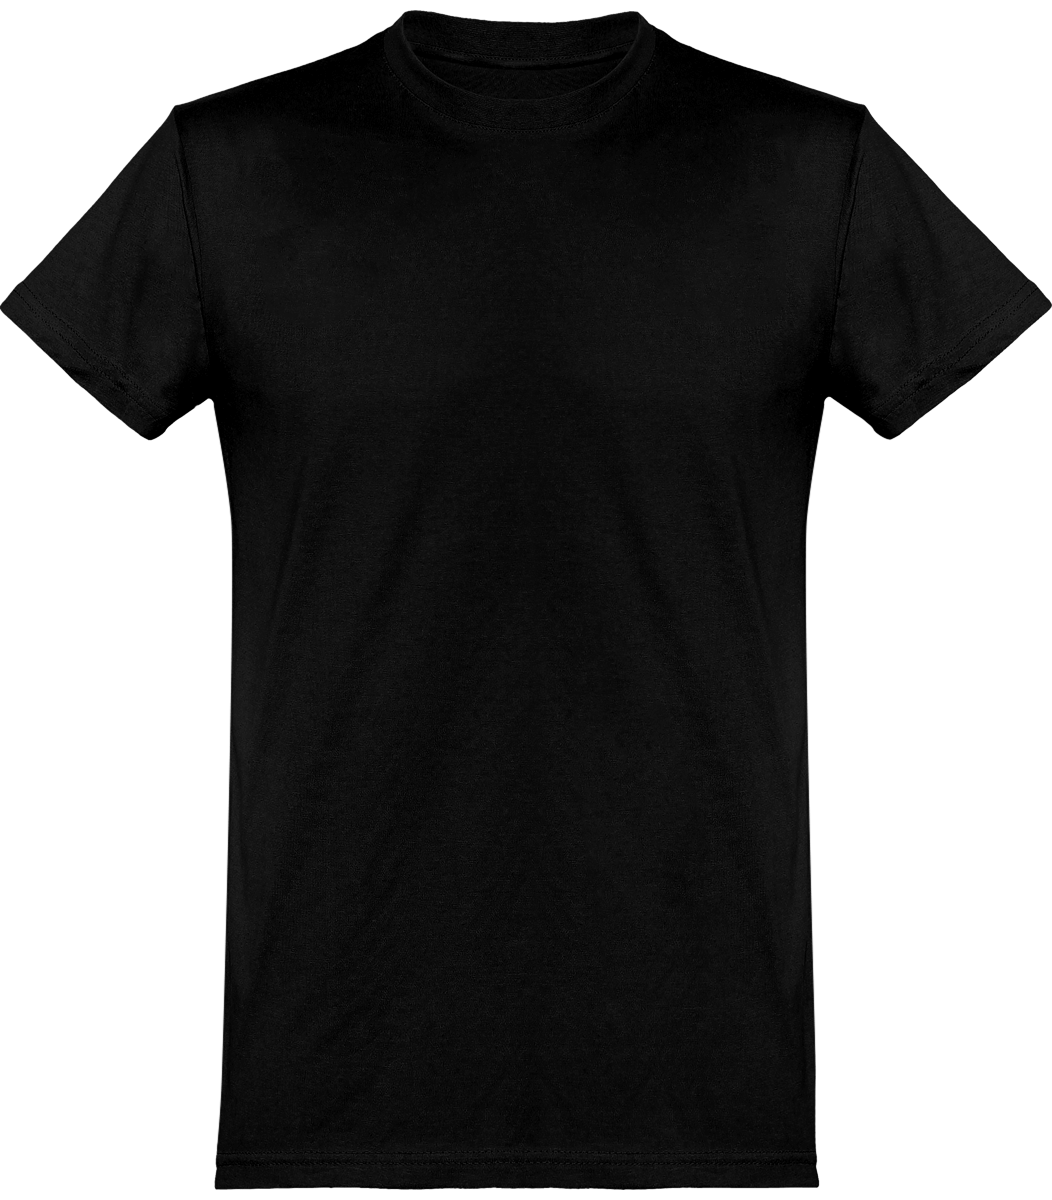 Tee-shirt sport près du corps polyester respirant 140 grs-m2 homme